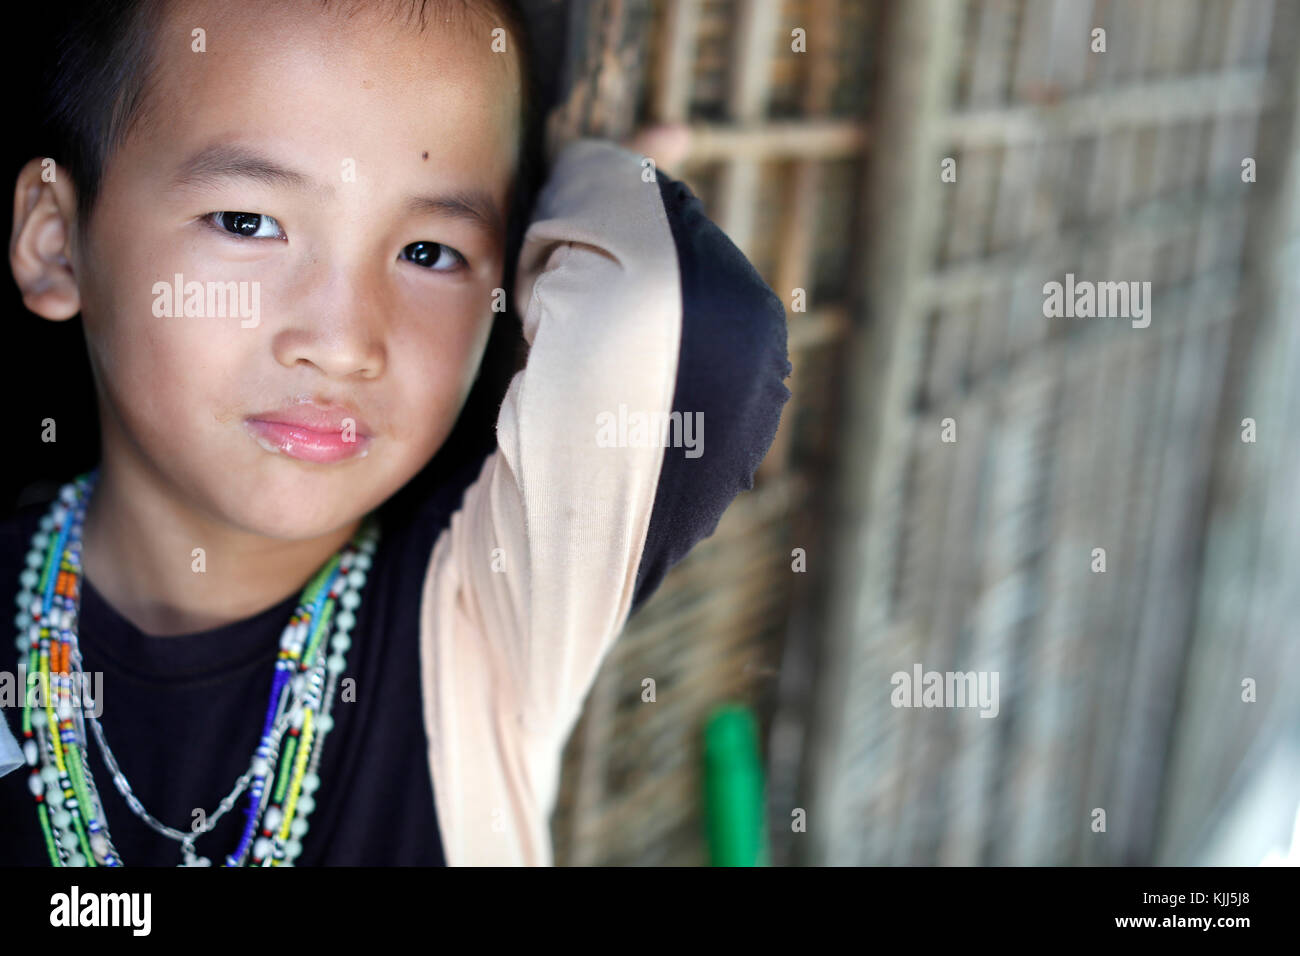 Bahnar (Ba Na) ethnische Gruppe. Junge Junge. Porträt. Kon Tum. Vietnam. Stockfoto